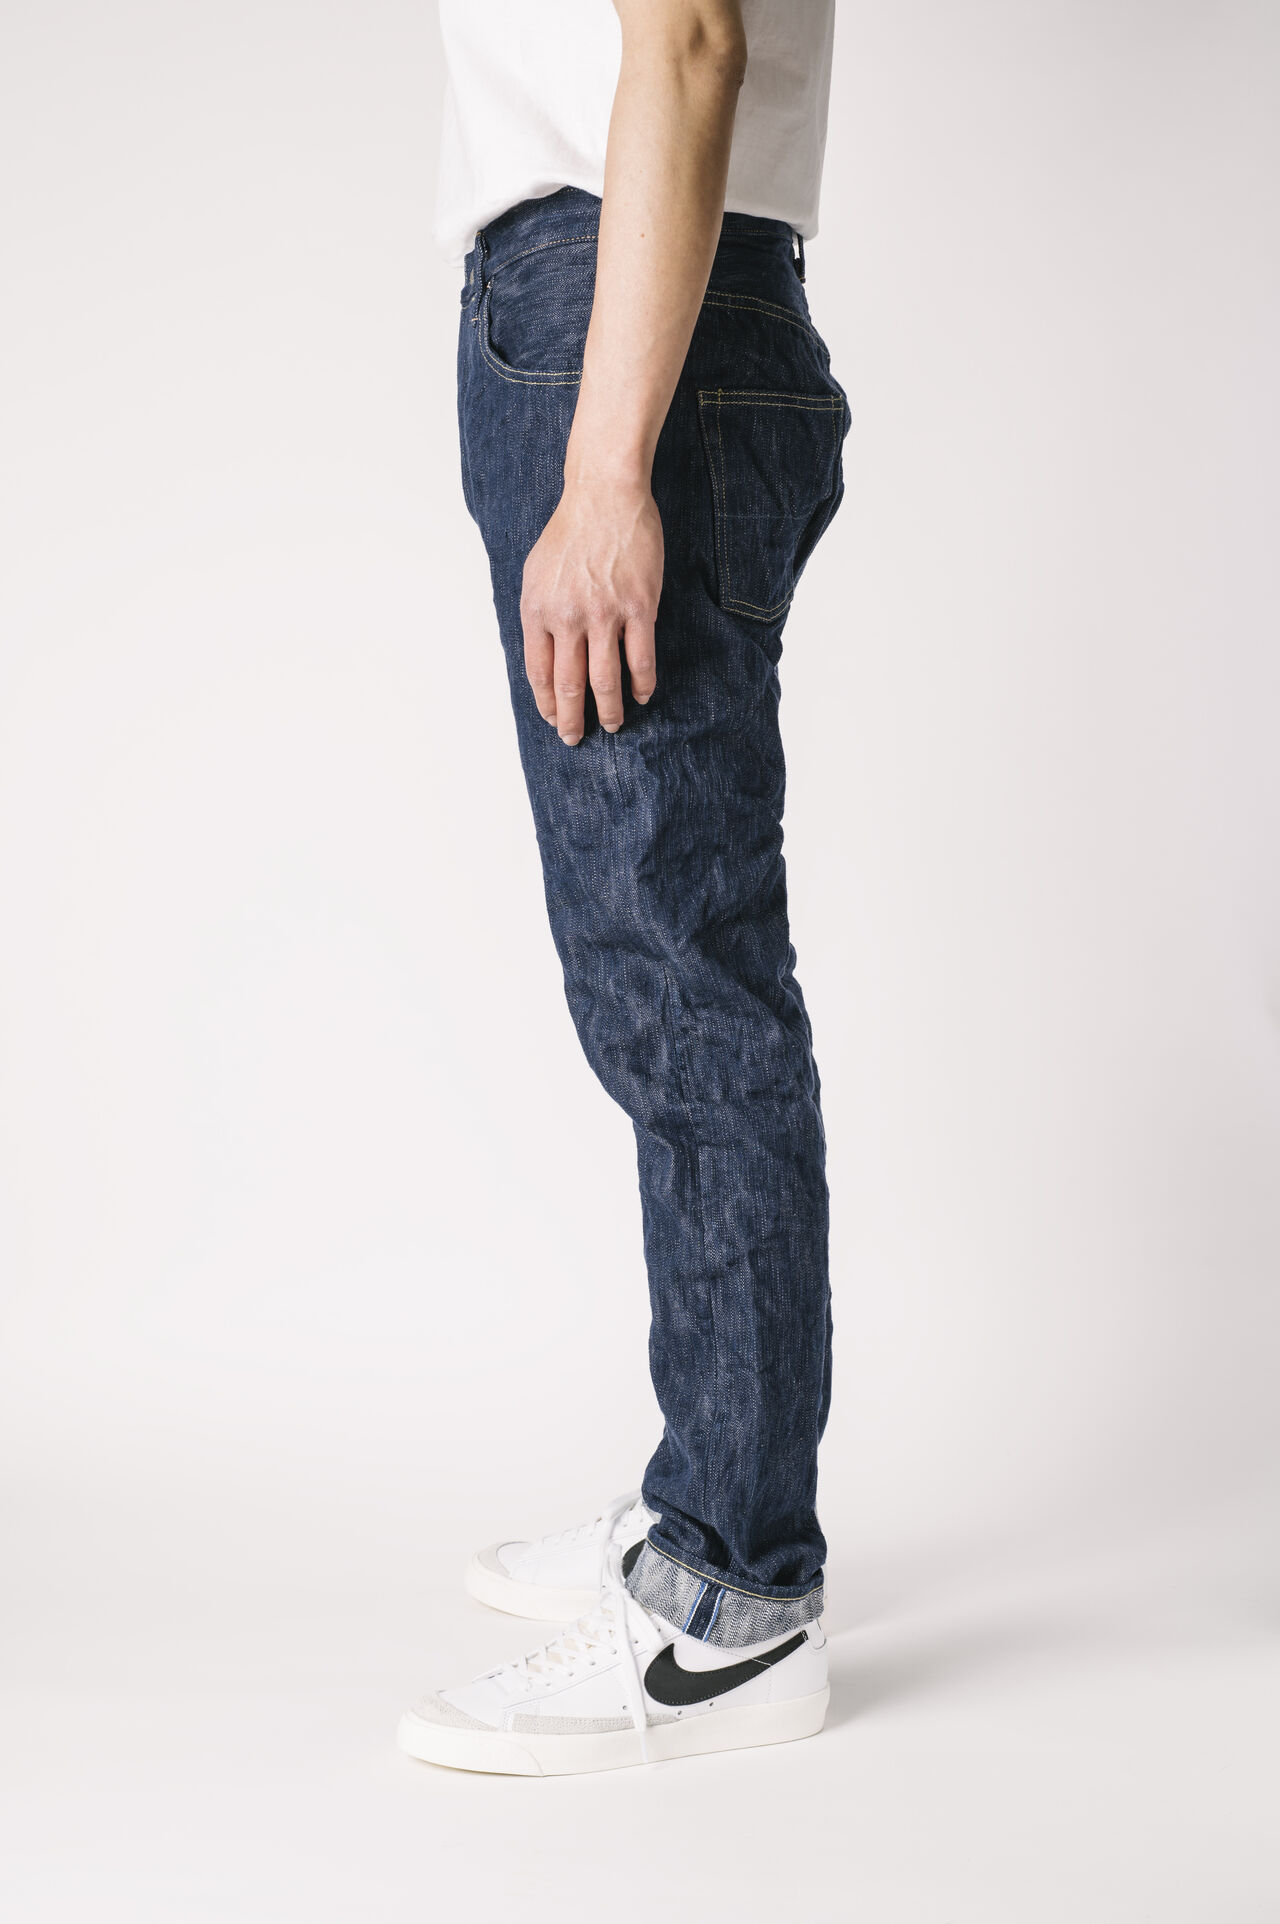 AHT 18oz Shoai "Arashi" High Tapered Jeans,, large image number 2